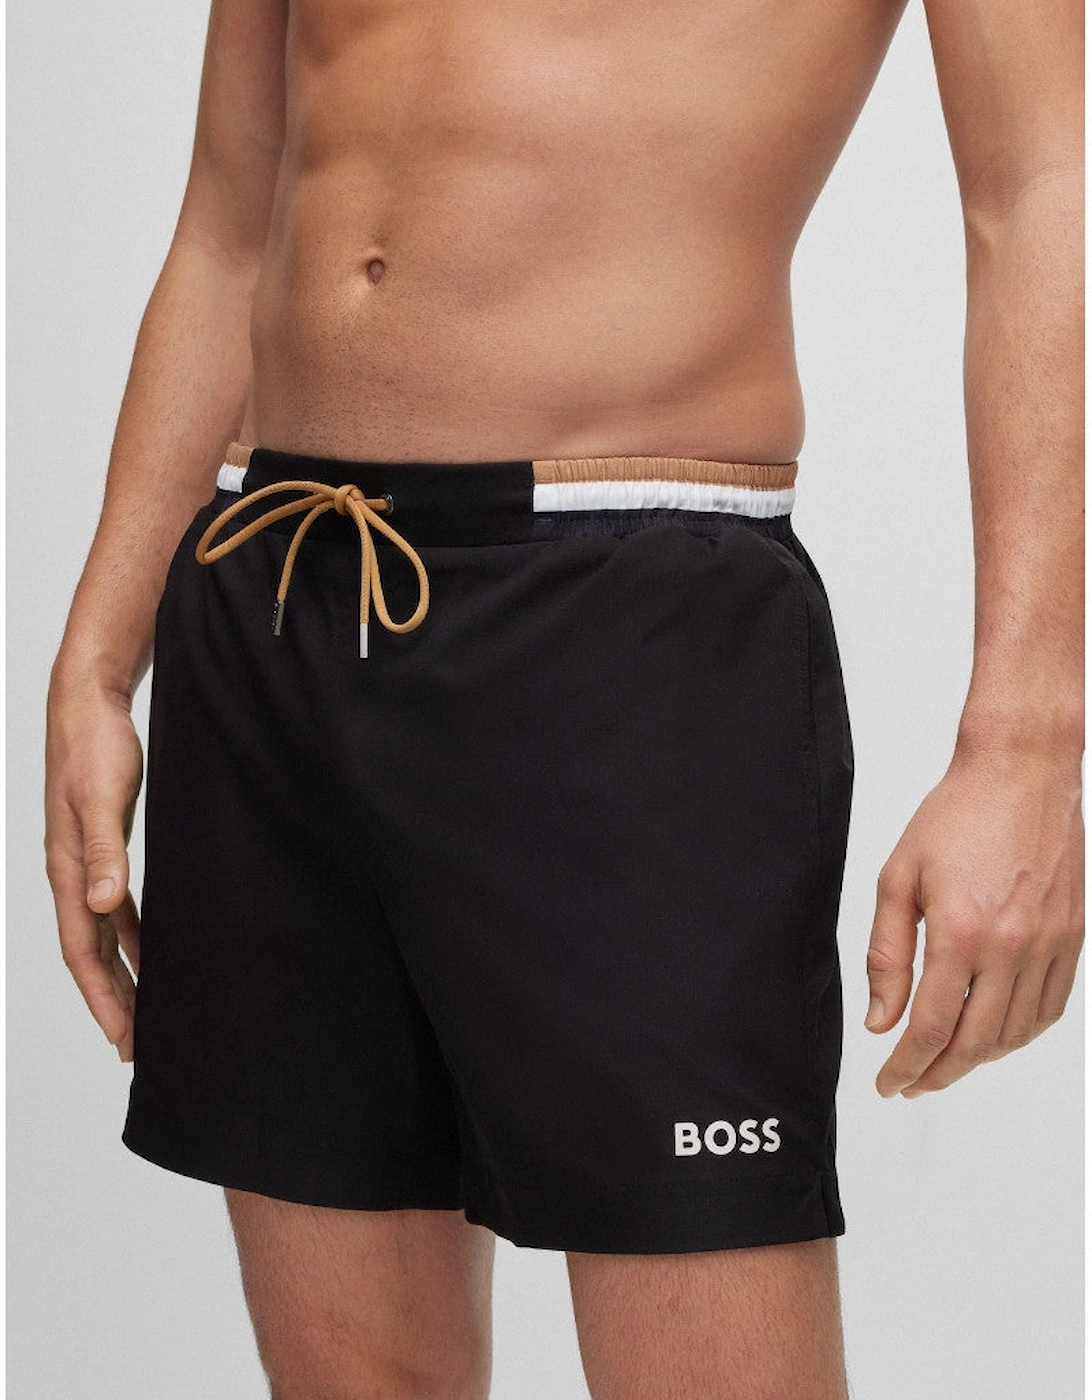 BOSS Black Atoll Swim Shorts 004 Black